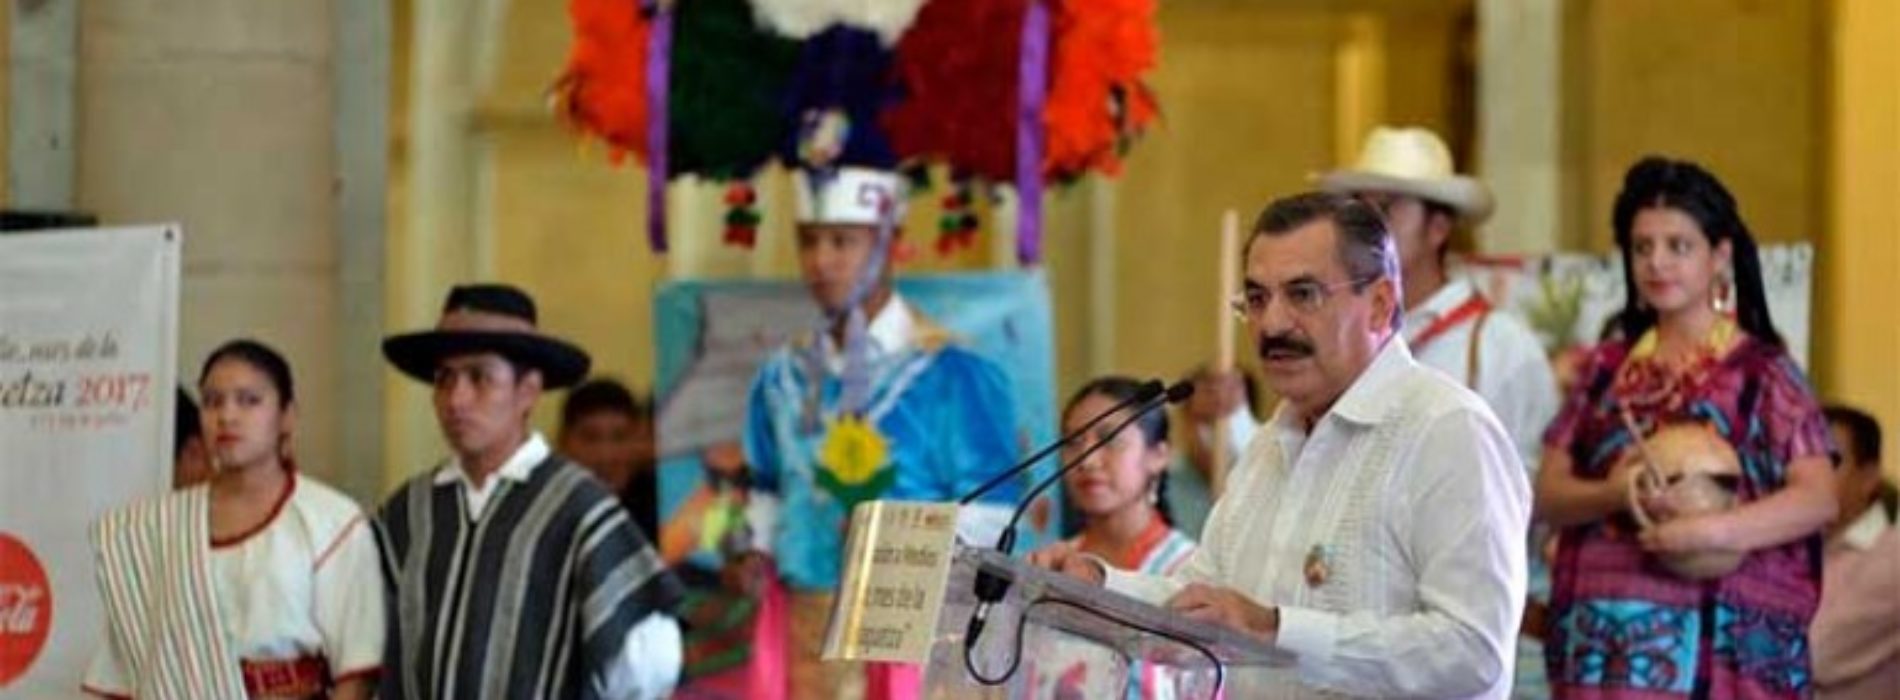 Oaxaca de Juárez se suma a las Fiestas de la Guelaguetza 2017.